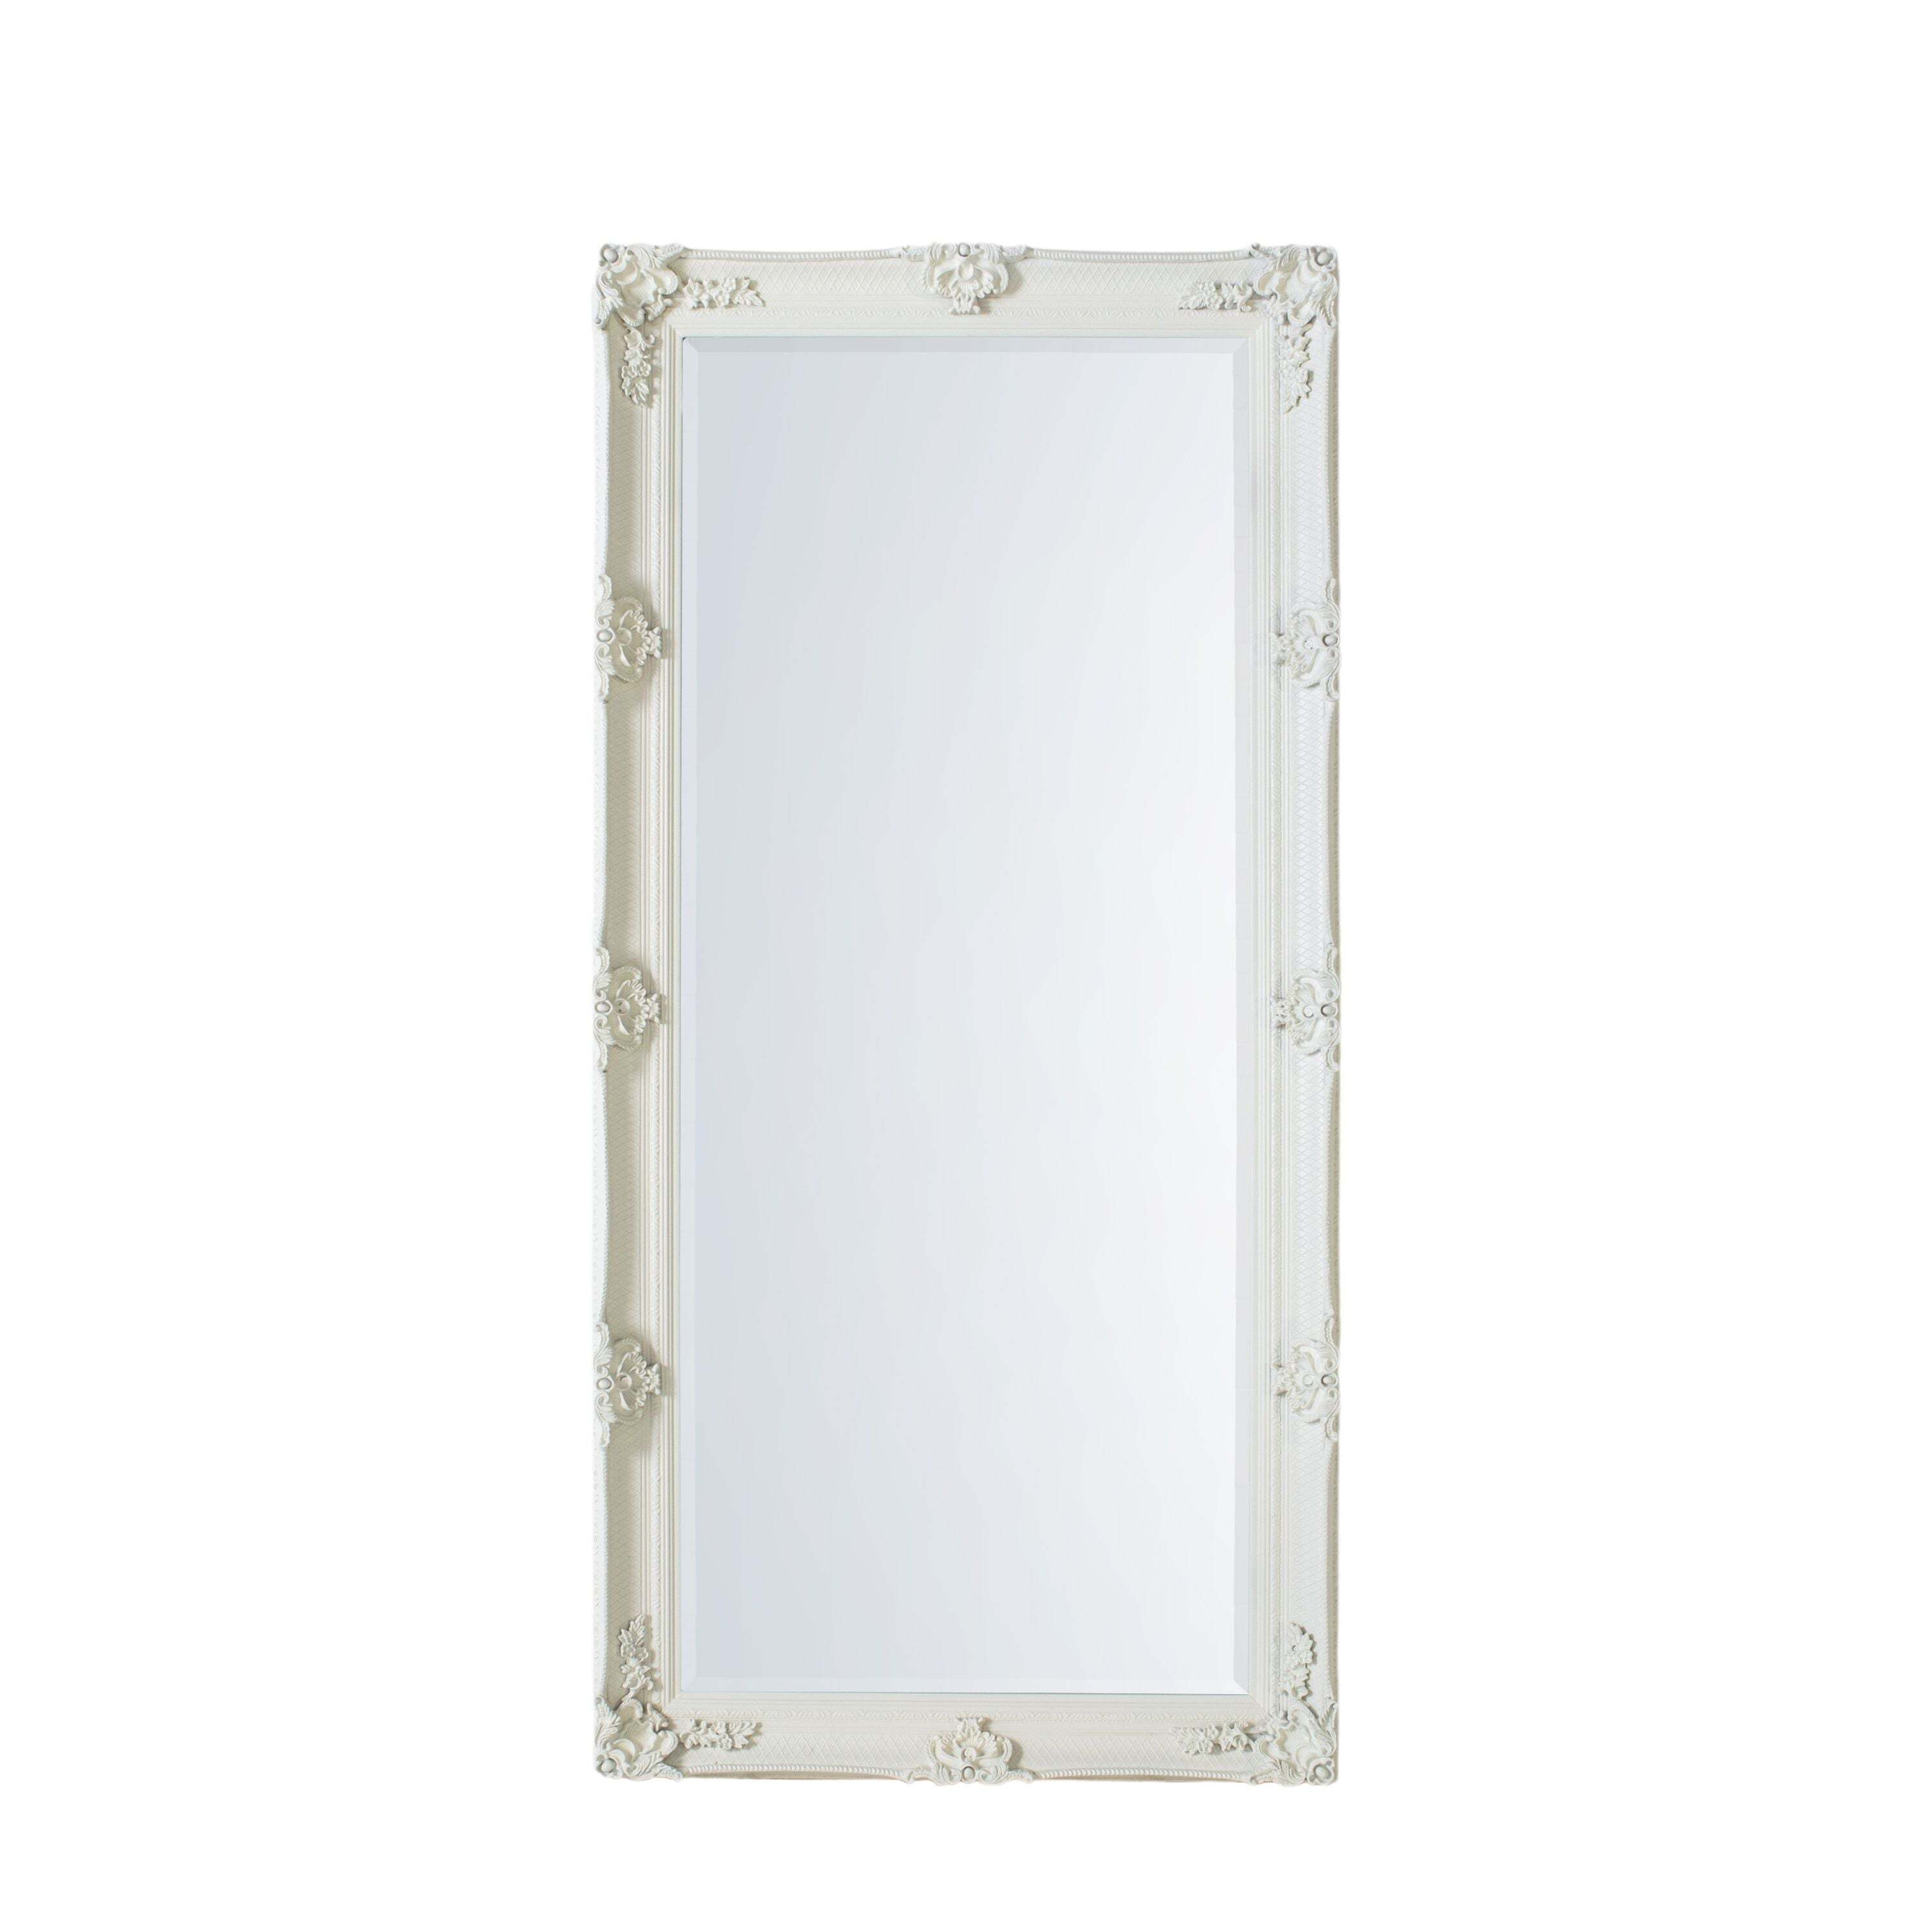 Gallery Interiors Abbey Leaner Mirror in Cream - image 1